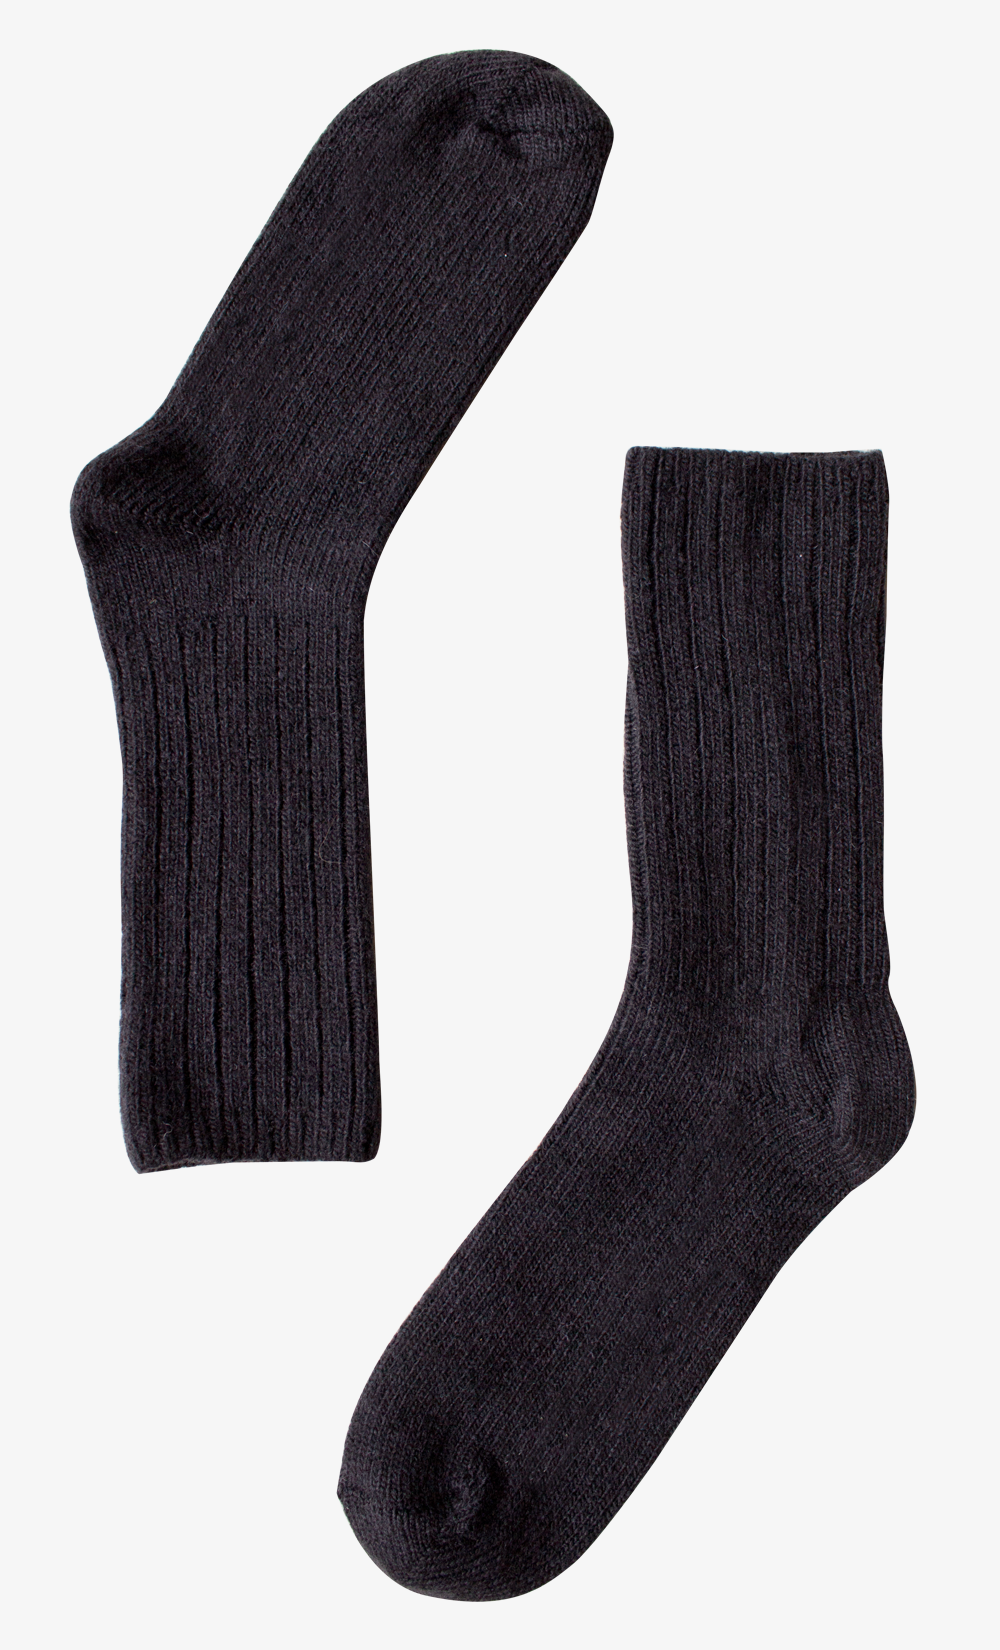 Lamb/Merino Wool Socks - Black